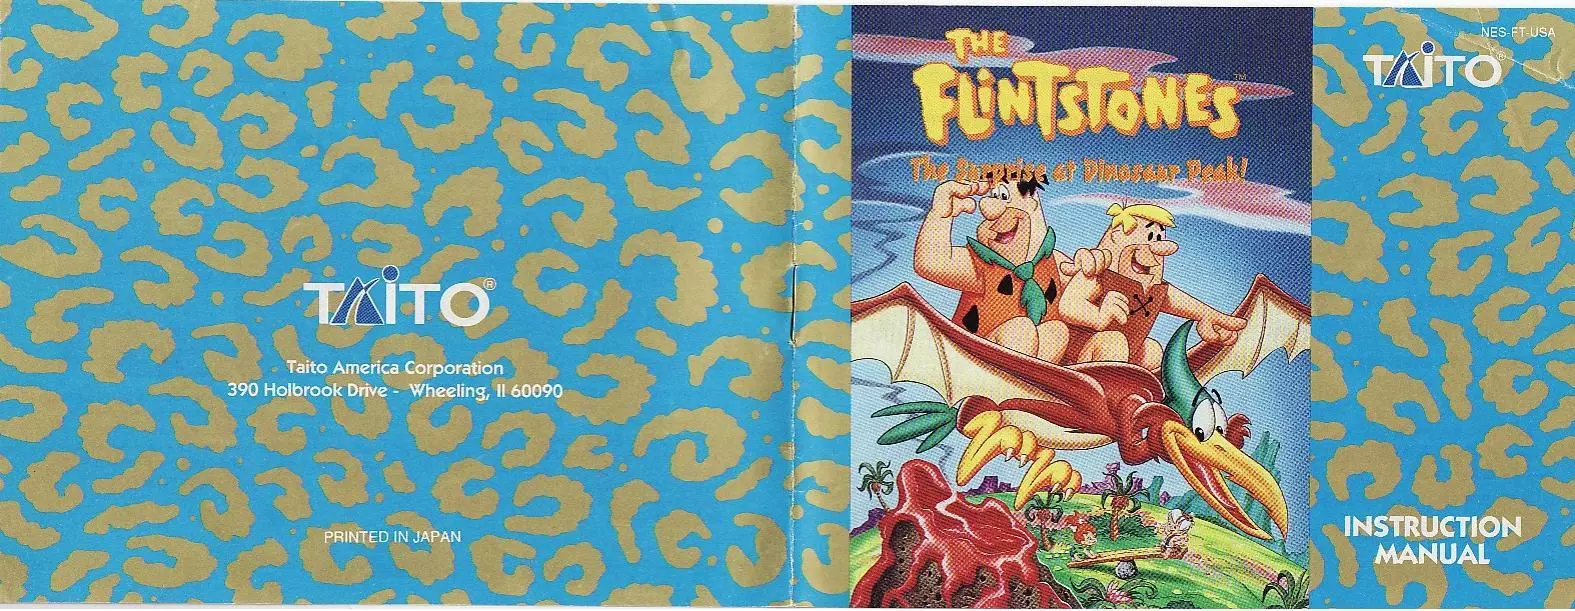 manual for Flintstones, The - The Surprise at Dinosaur Peak!